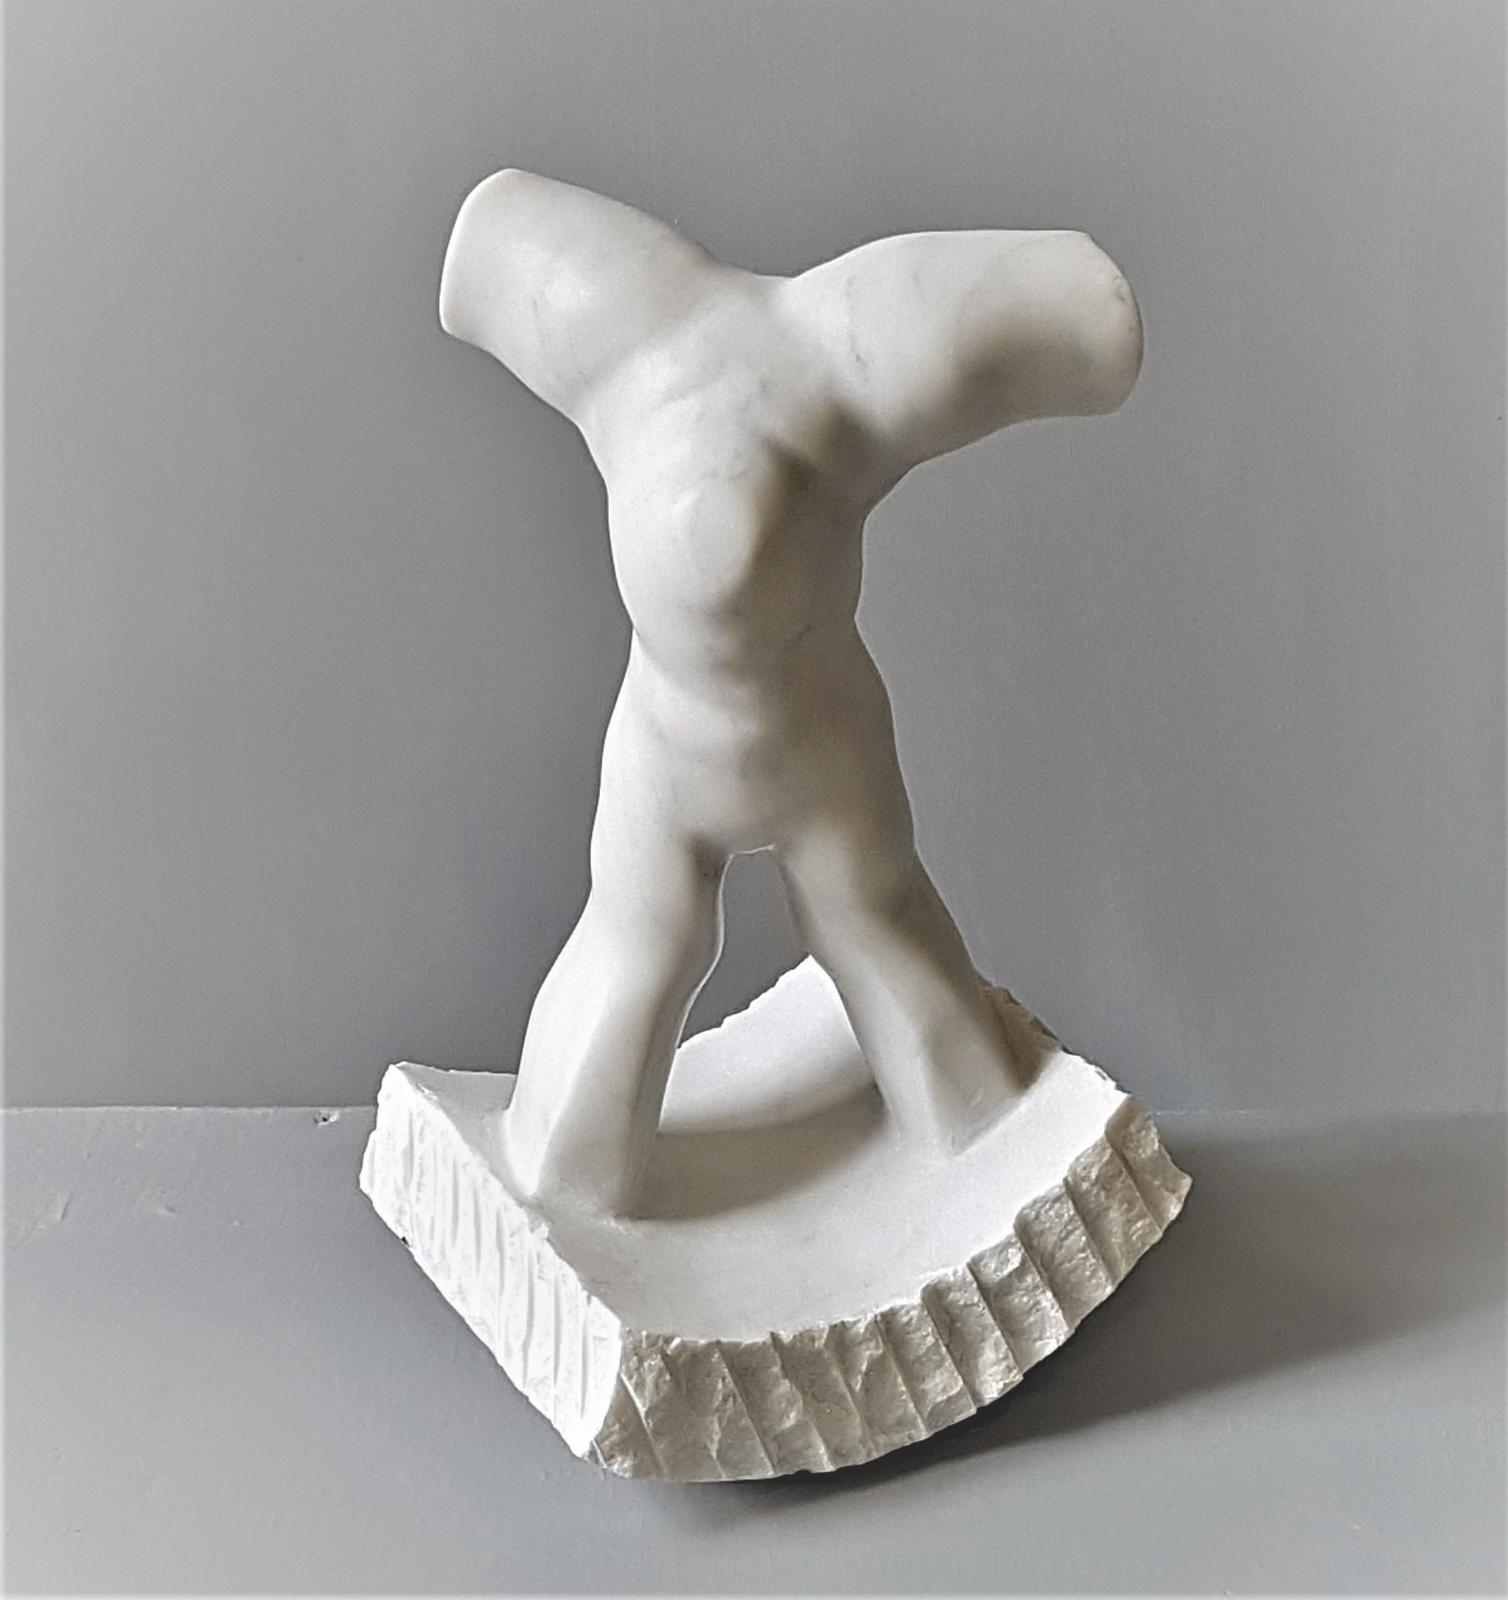 Christoph Traub, Balance, 2020, Marmor, 33 x 15 x 19 cm, trc023ko